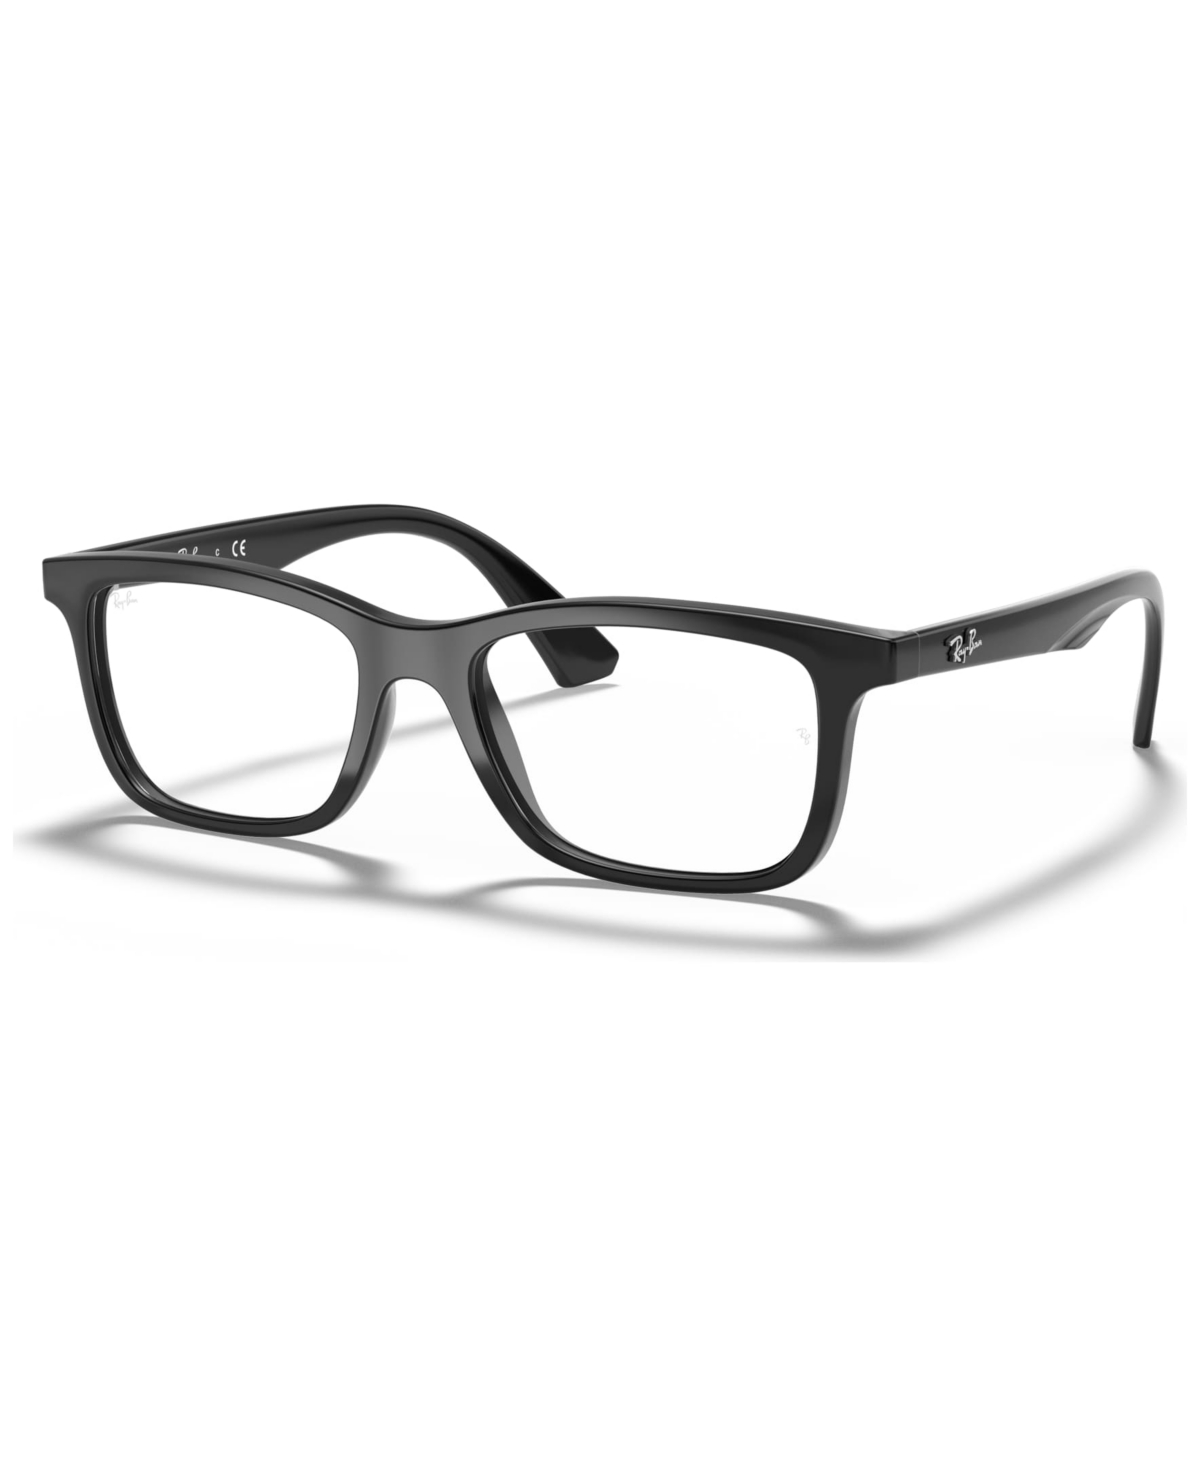 RY1562 Child Rectangle Eyeglasses - Black